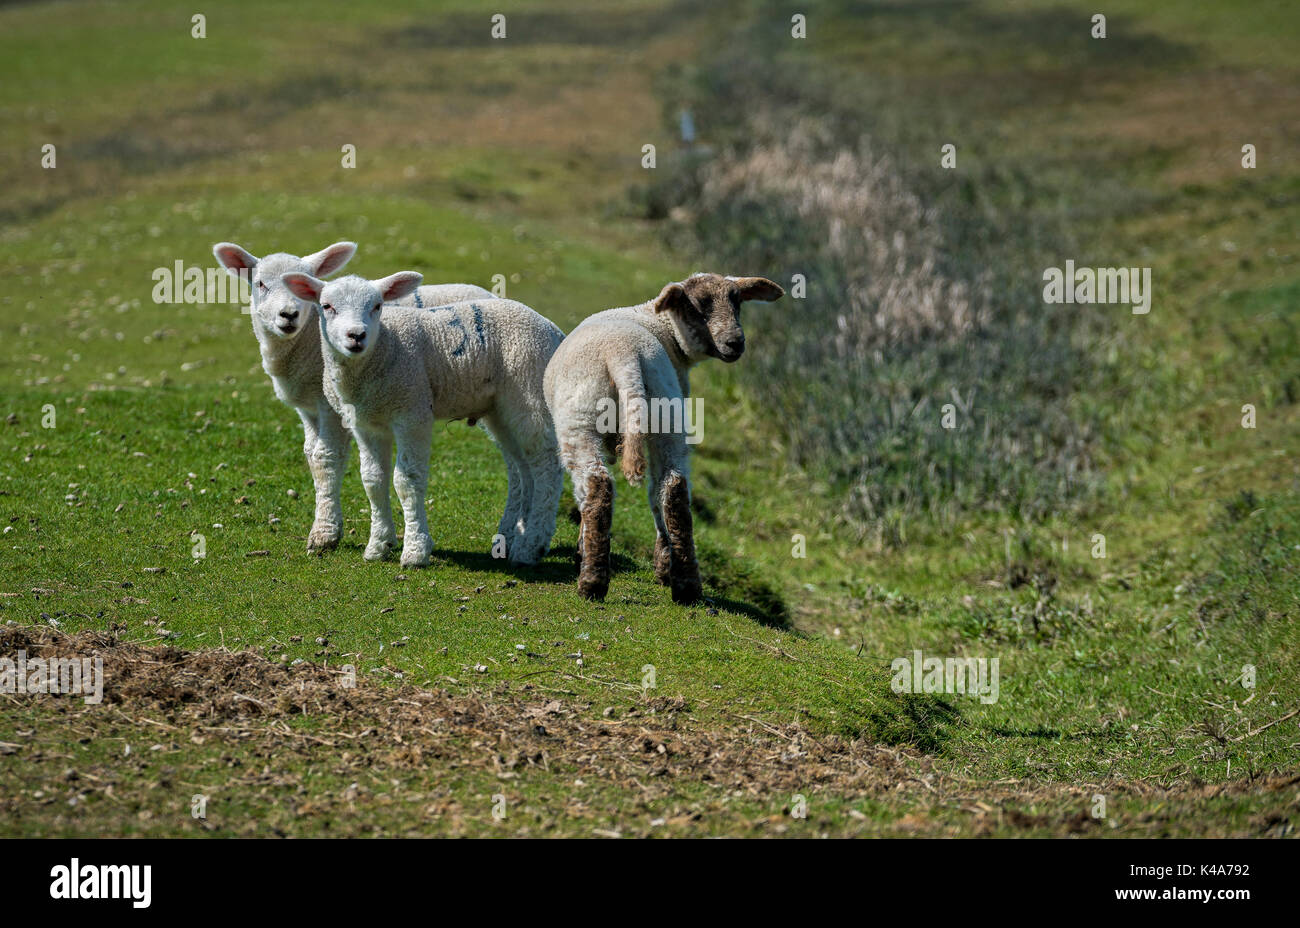 Sheep Stock Photo